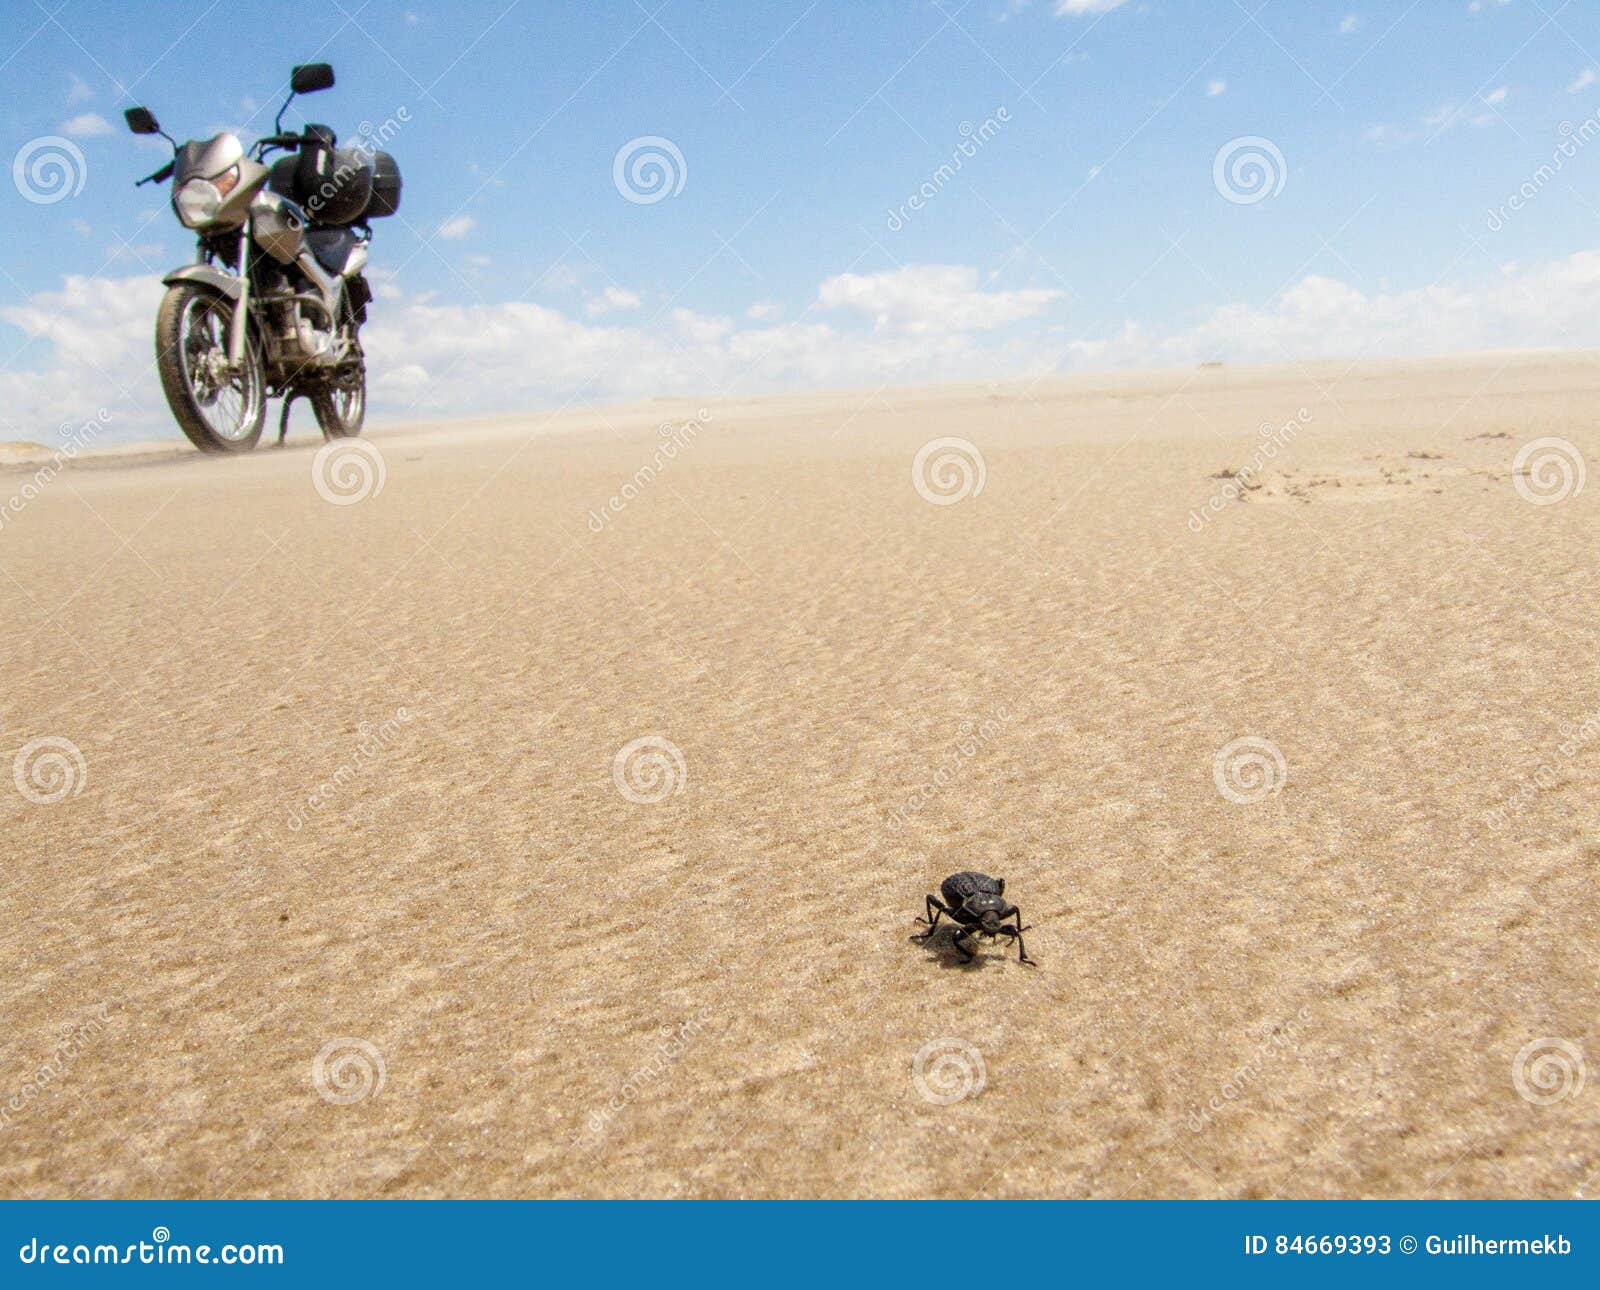 beetle and motorcycle